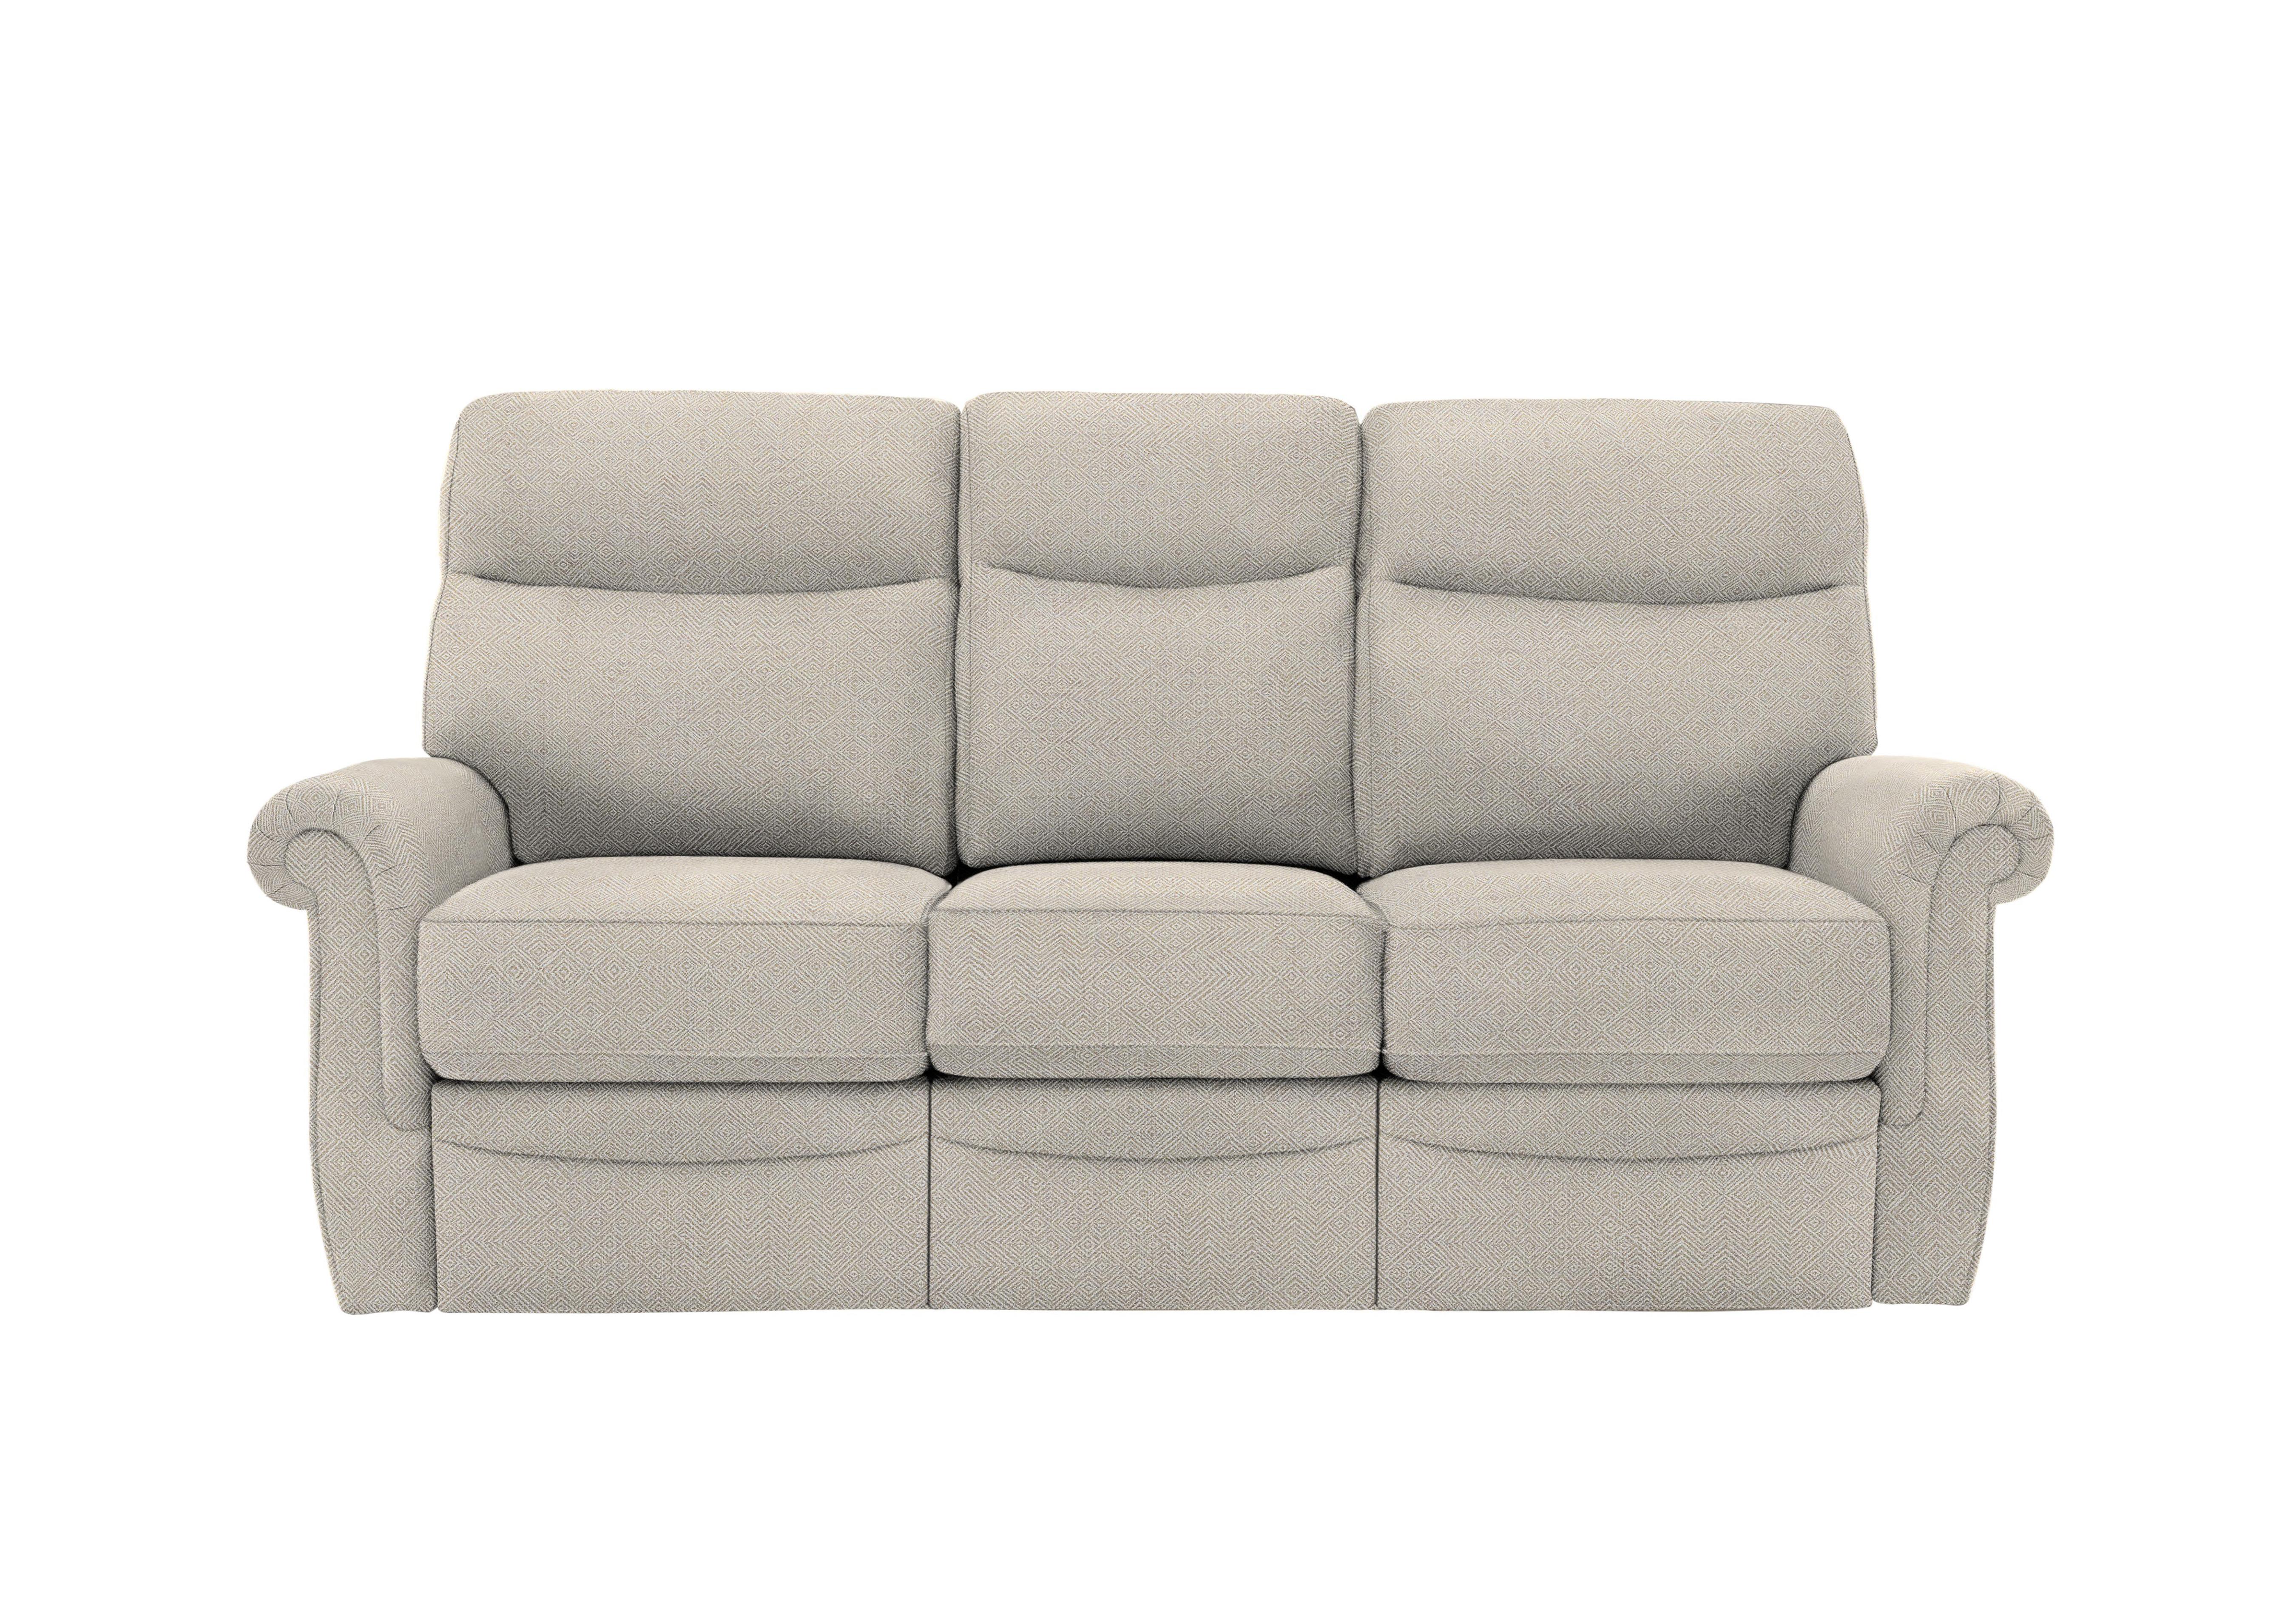 Avon 3 Seater Fabric Sofa in B011 Nebular Blush on Furniture Village